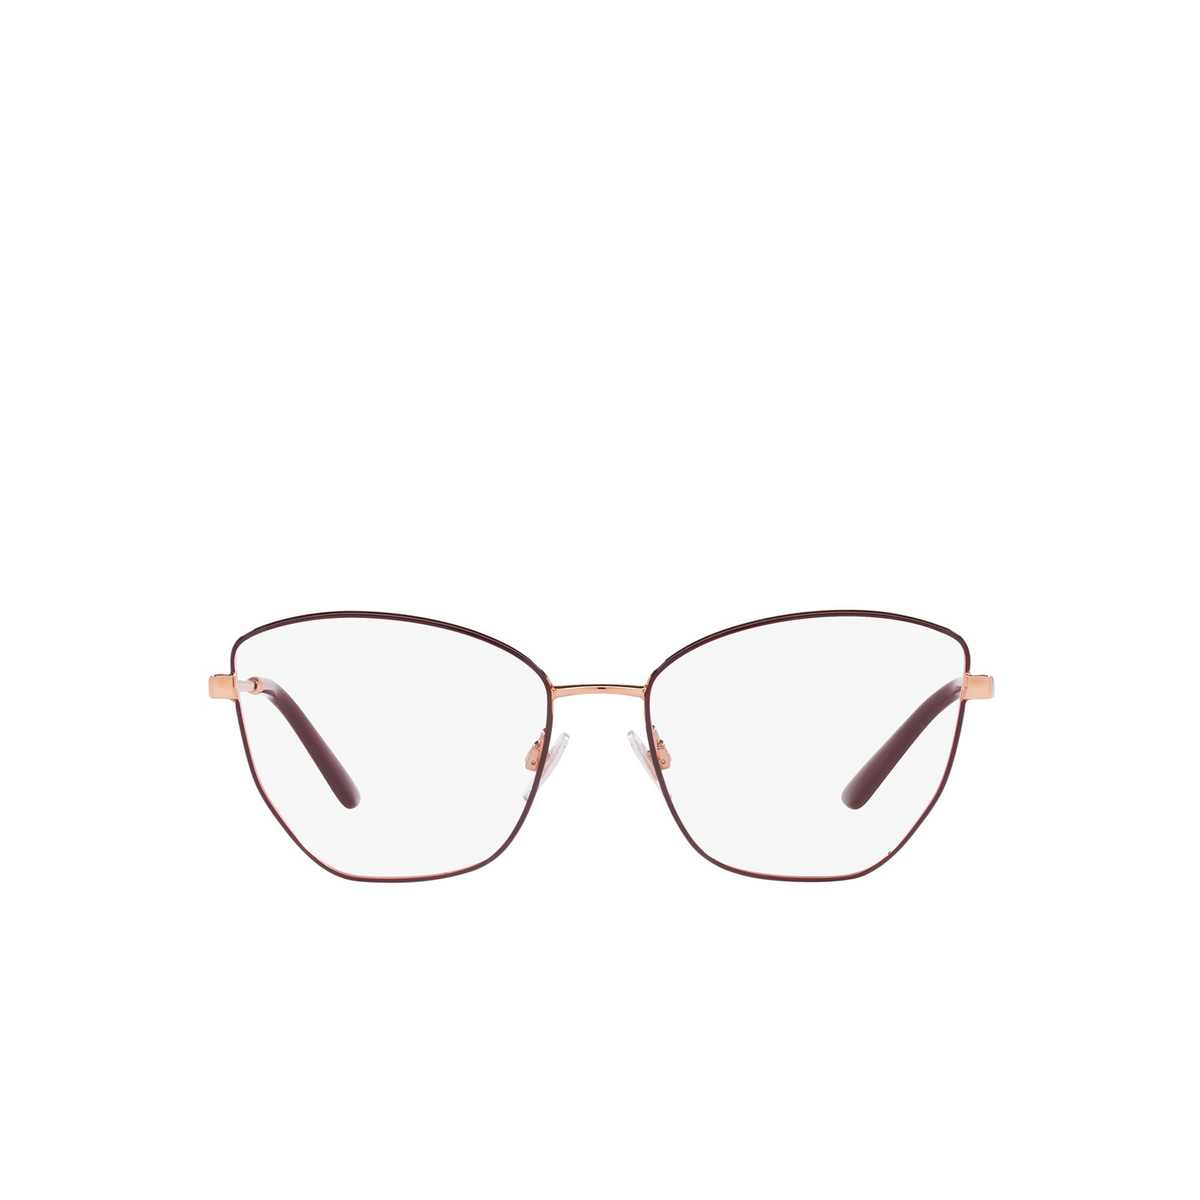 Dolce & Gabbana® Butterfly Eyeglasses: DG1340 color Pink Gold / Bordeaux 1351 - front view.